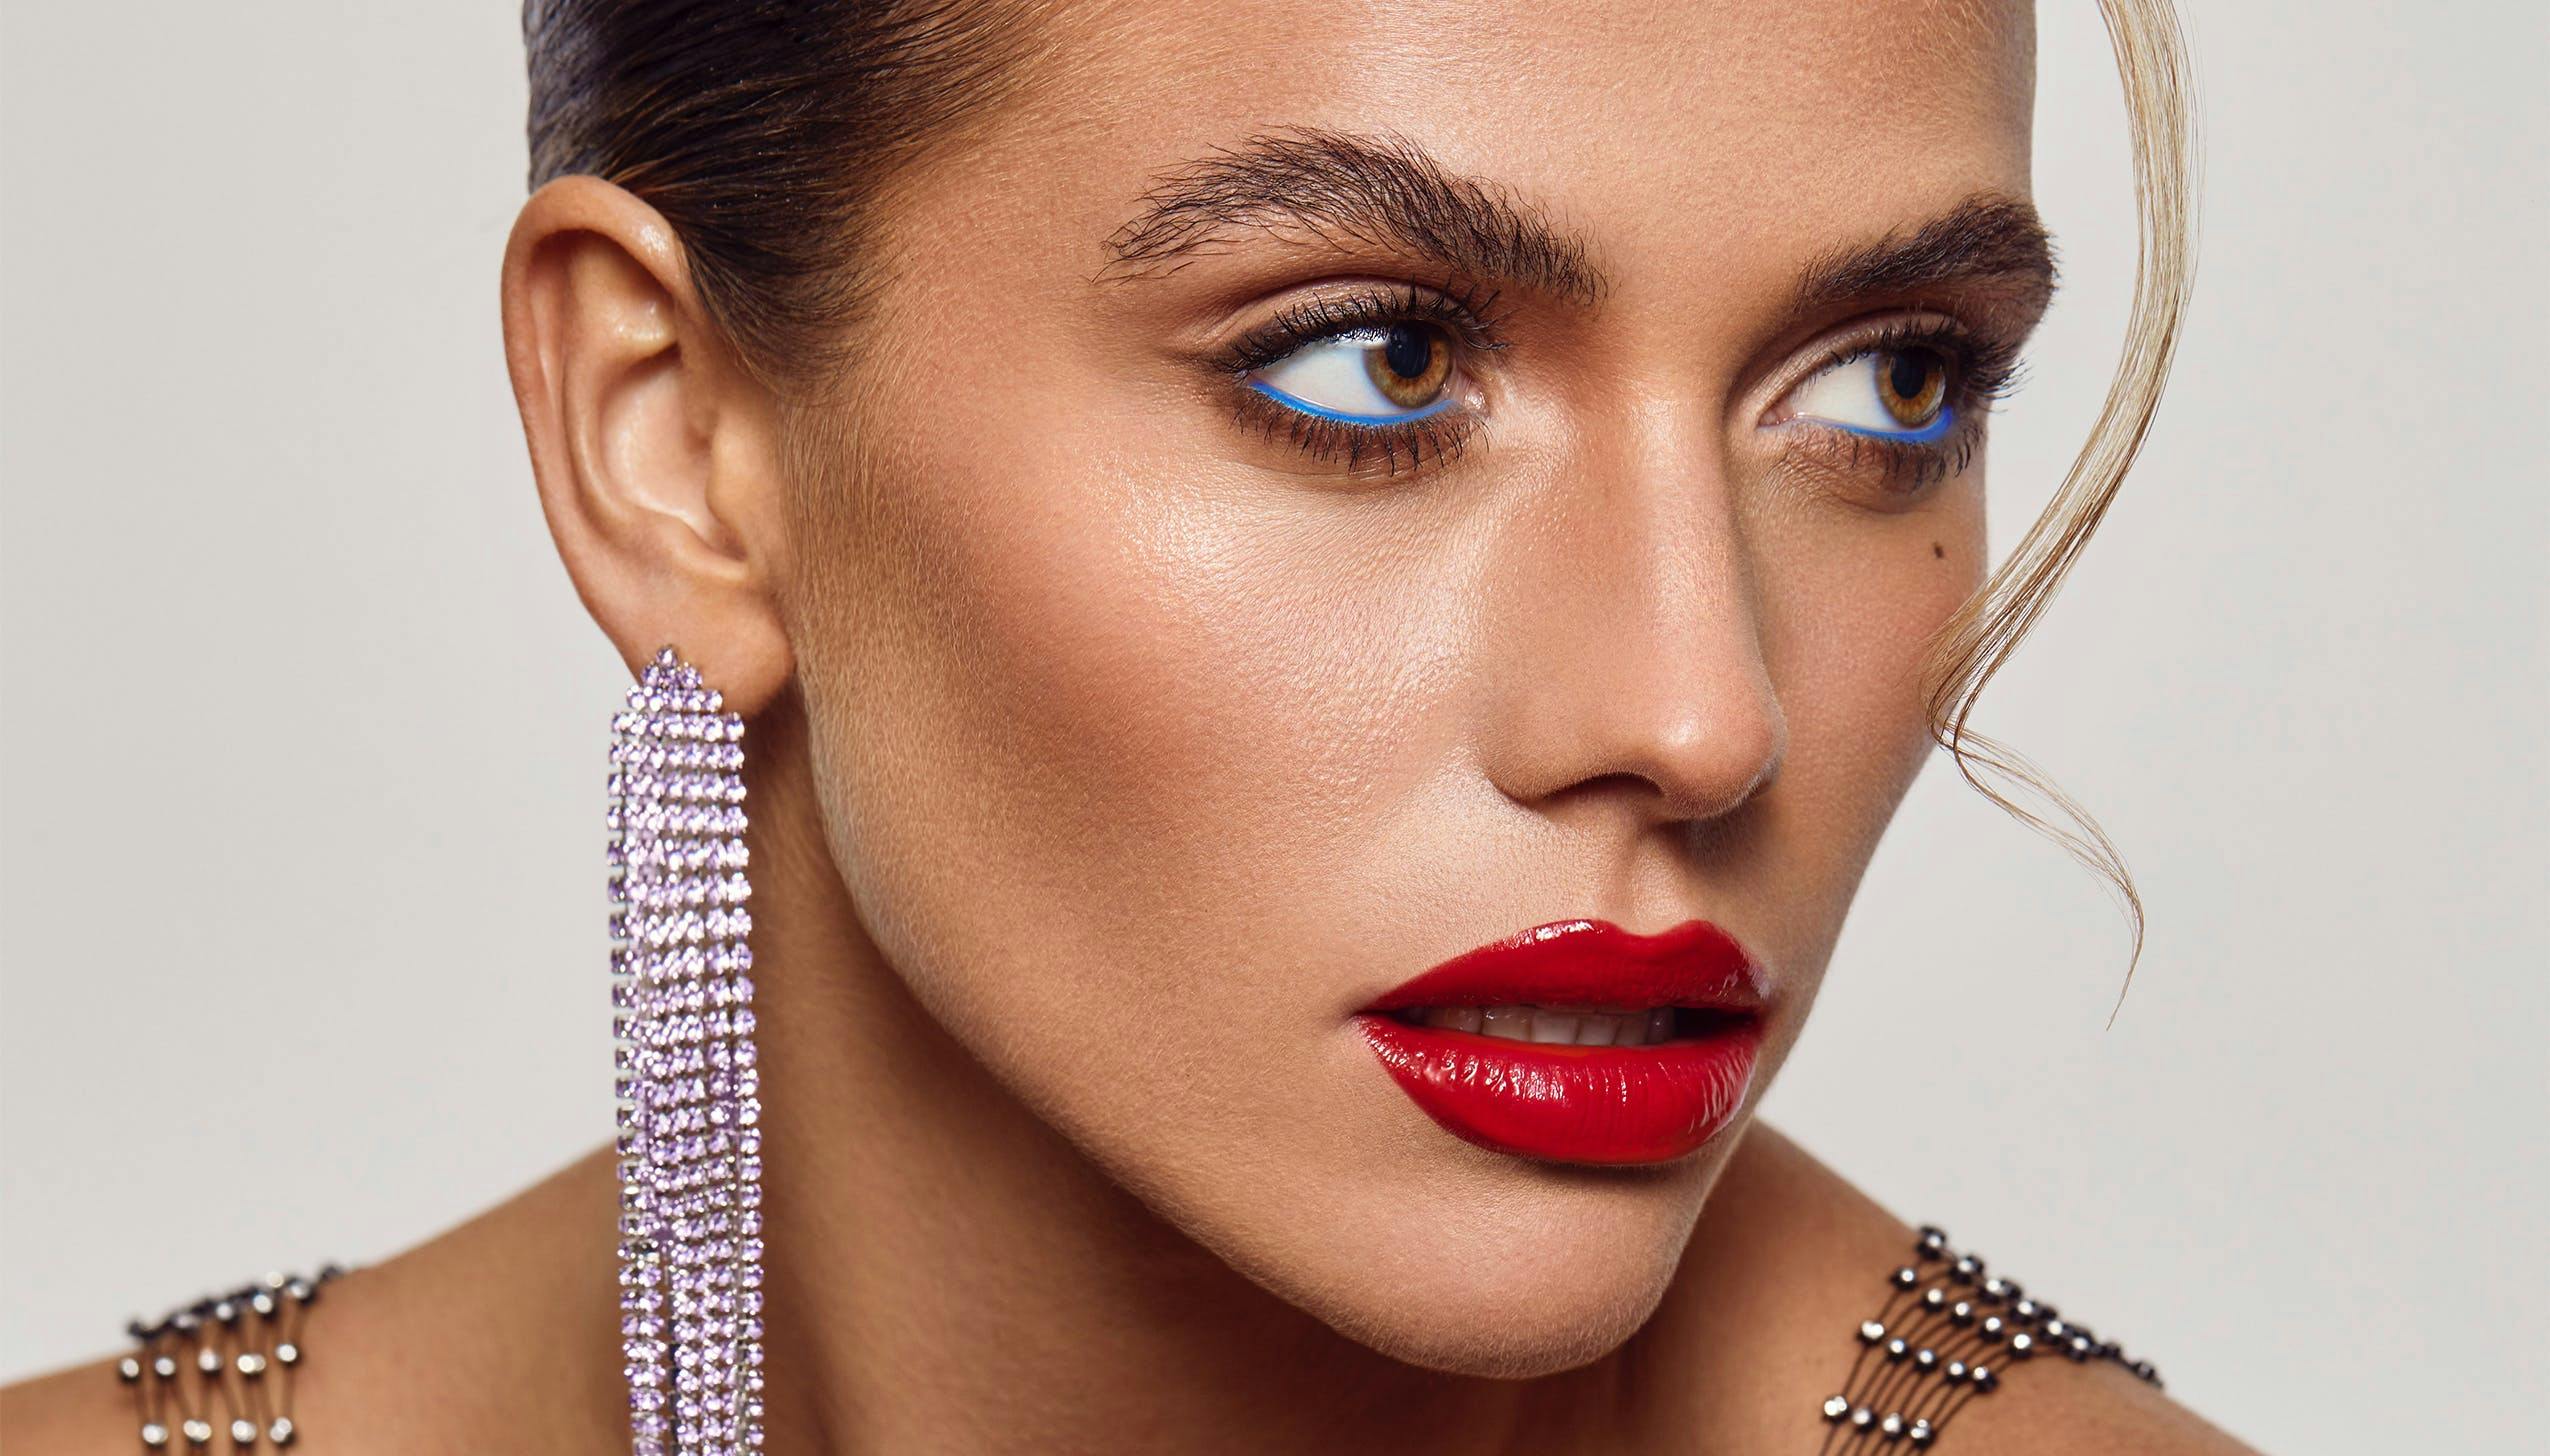 head person woman adult female face lipstick cosmetics portrait accessories